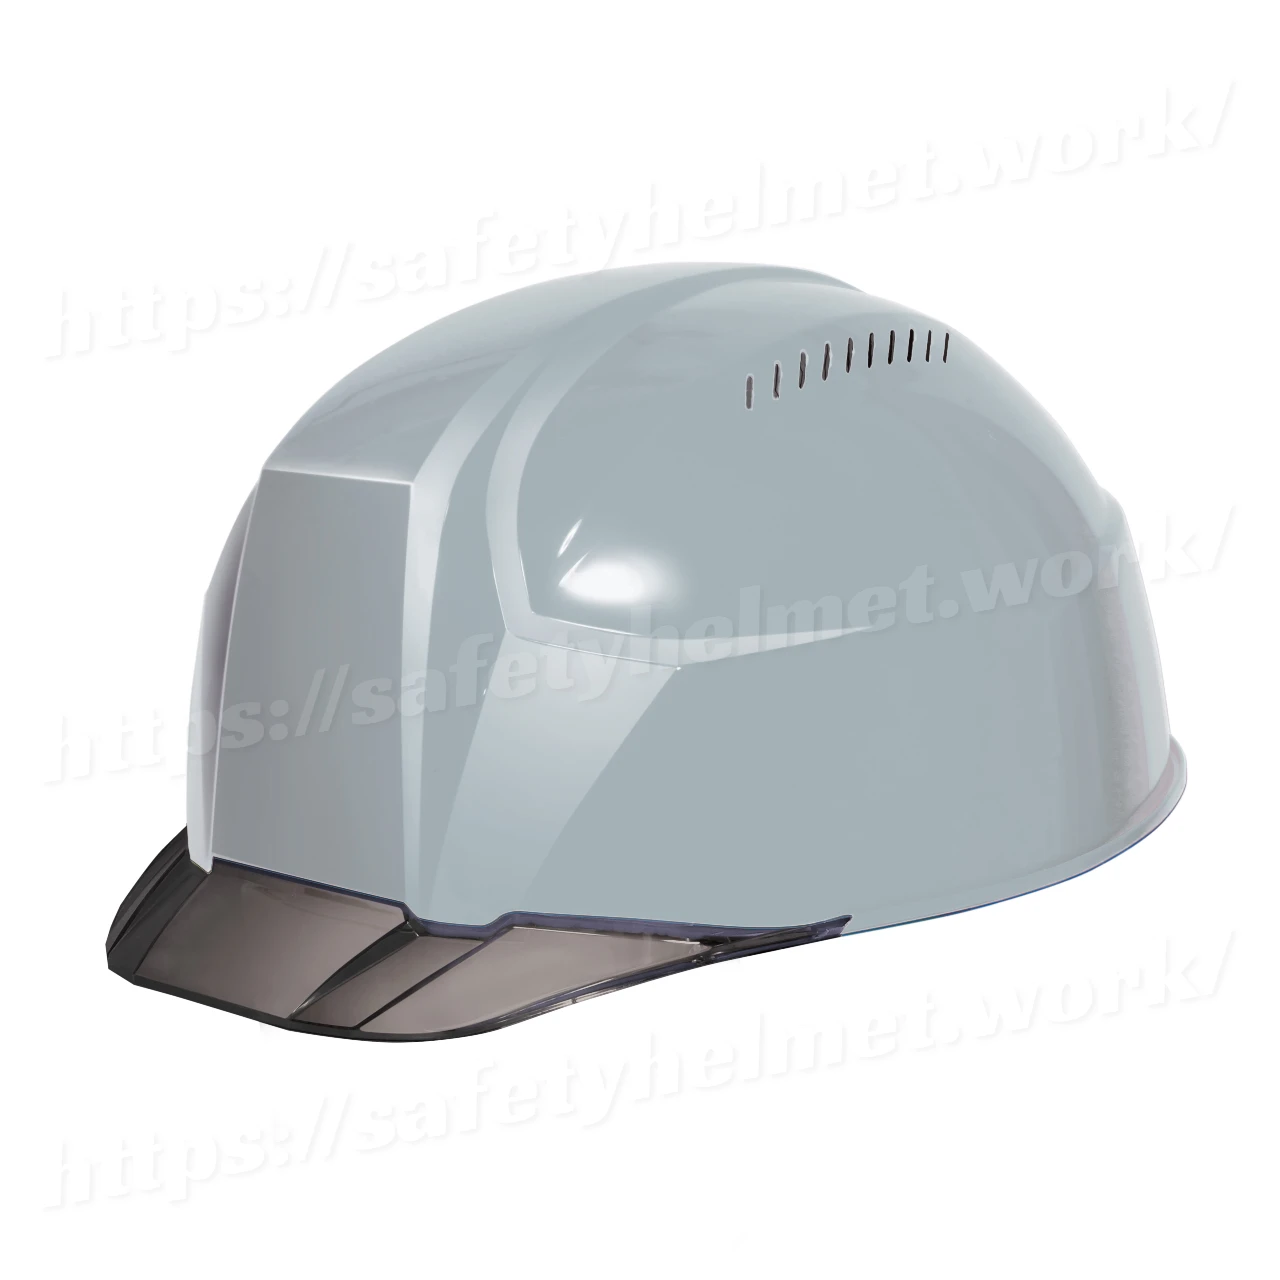 dic-lightest-helmet-keijin-clearvisor-aa23cv-gray-smoke